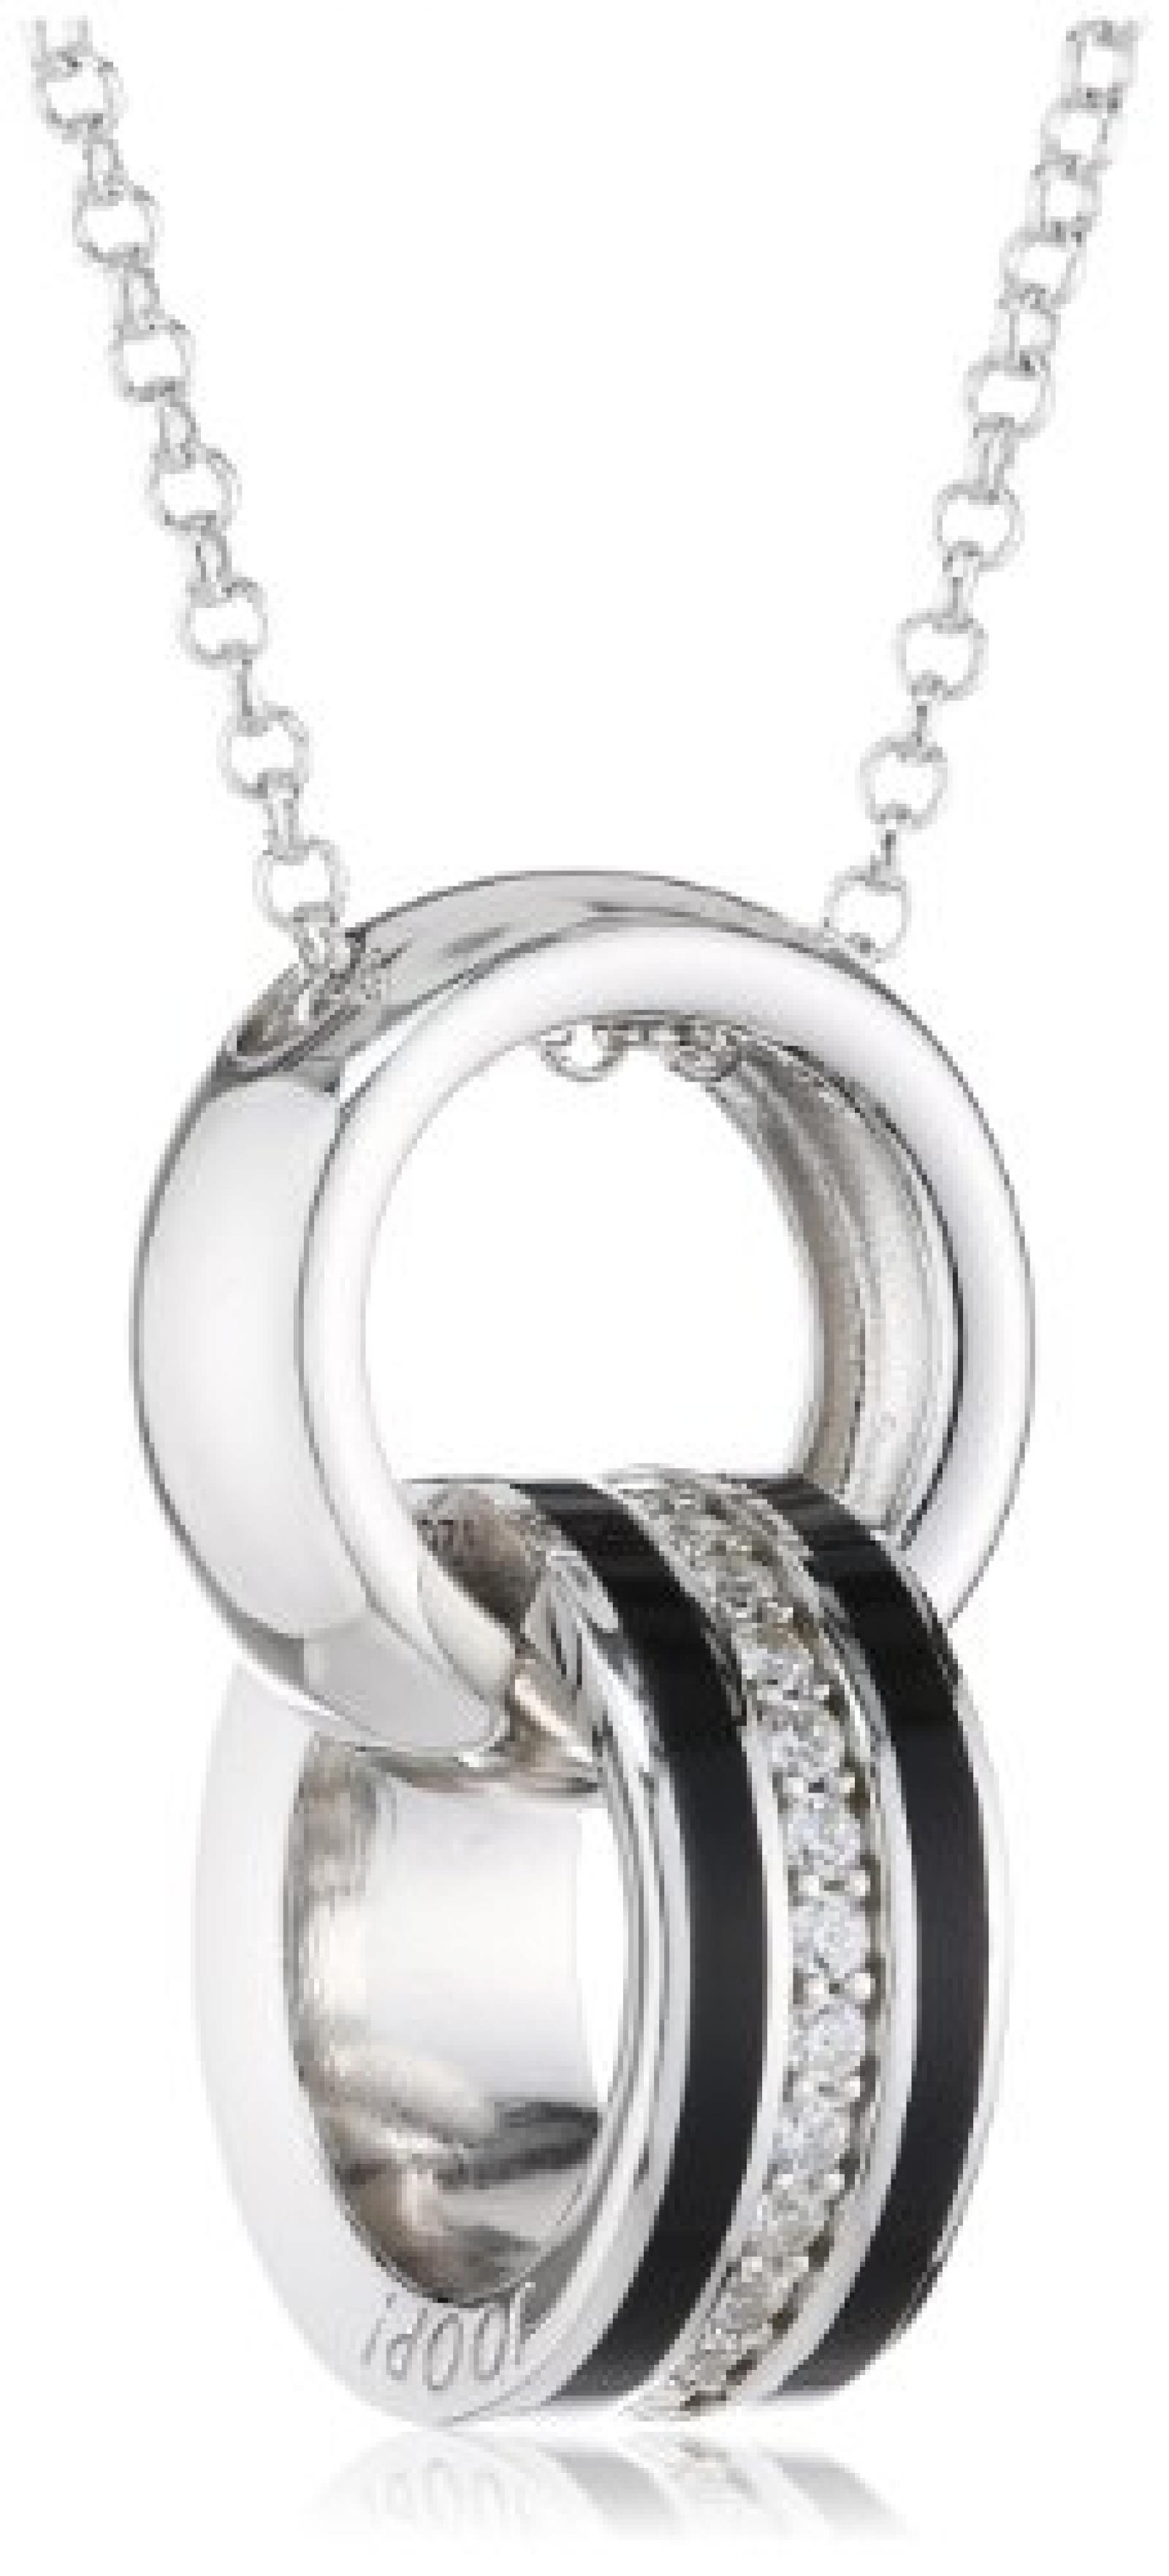 Joop Damen-Halskette mit AnhÃ¤nger Epoxy schwarz Zirkonia weiss 45+3 cm 925 Sterling Silber JPNL90639A450 